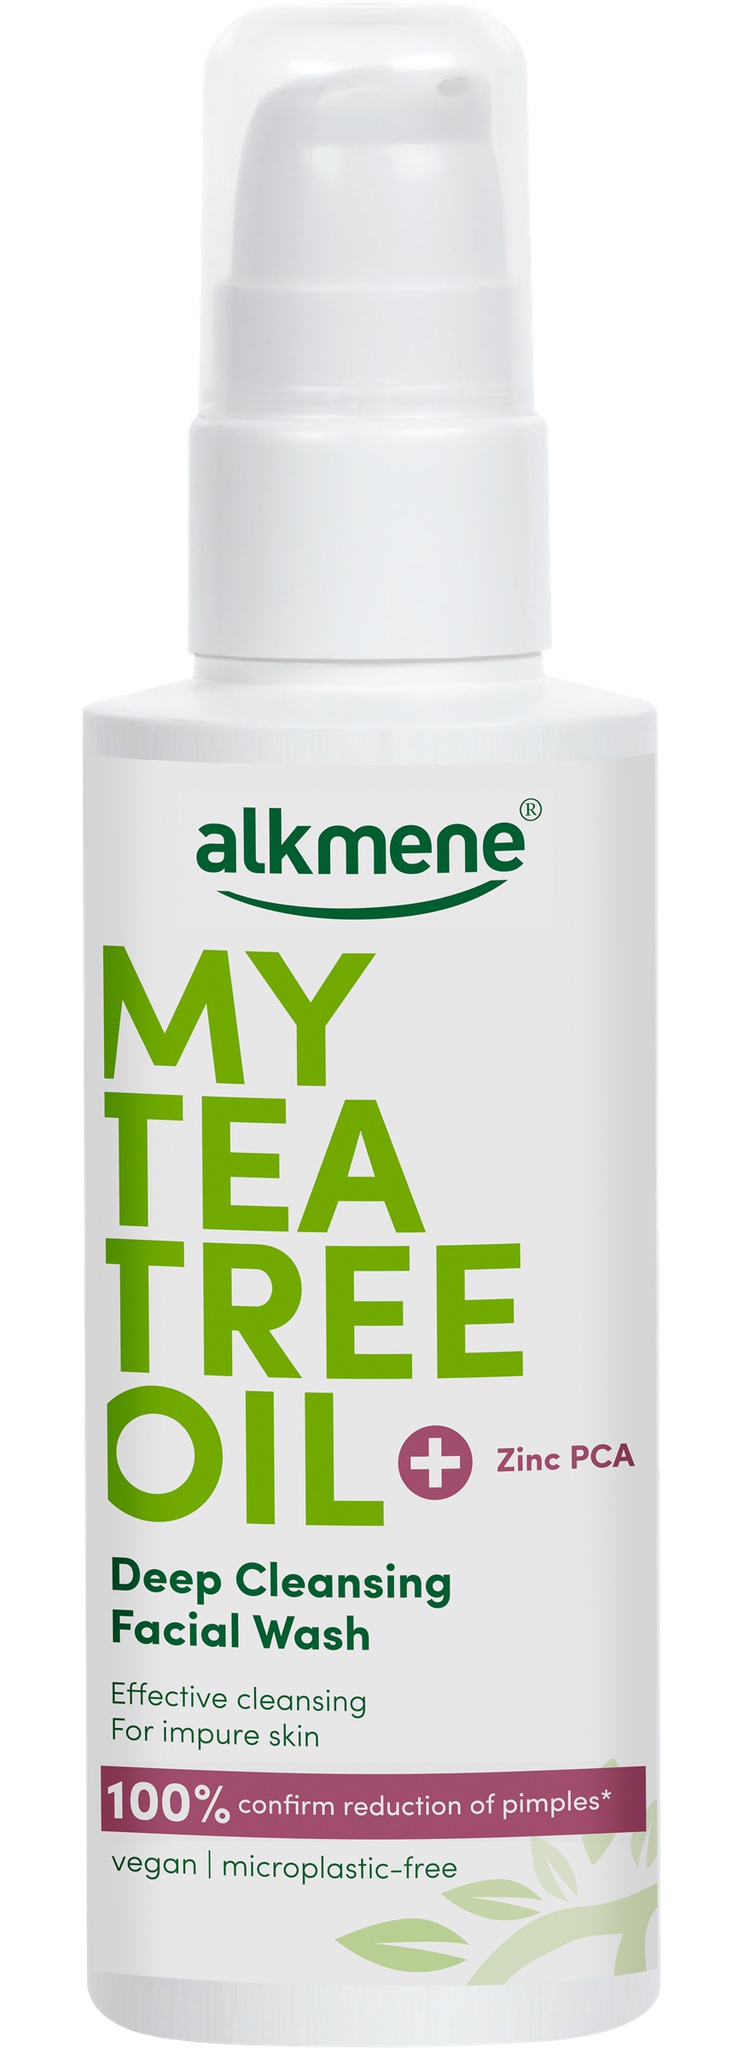 Alkmene My Tea Tree Oil Deep Cleansing Facial Wash